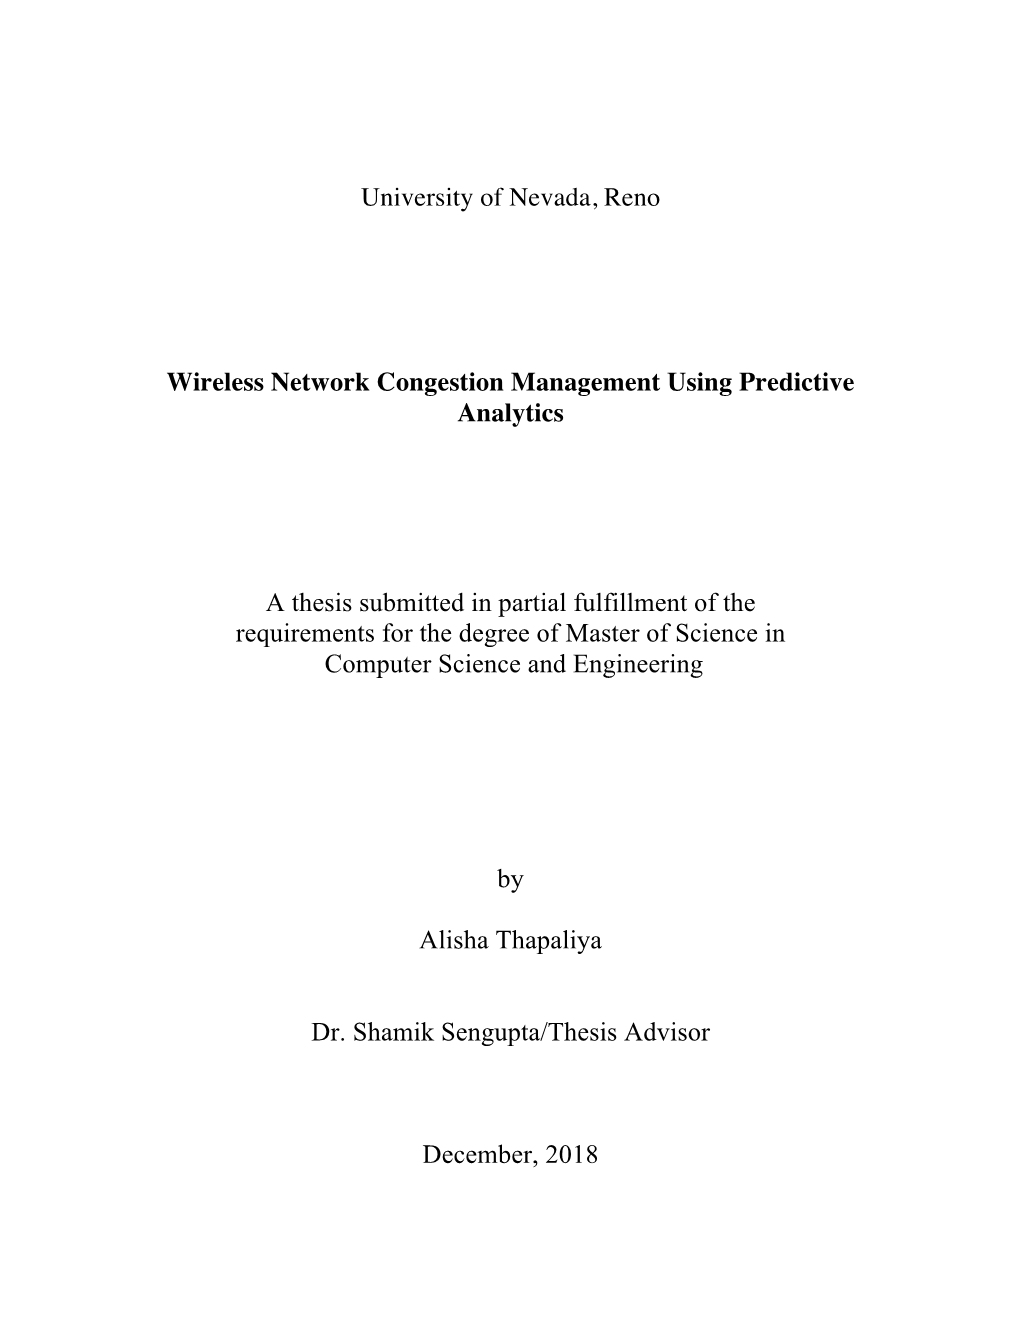 Wireless Network Congestion Management Using Predictive Analytics